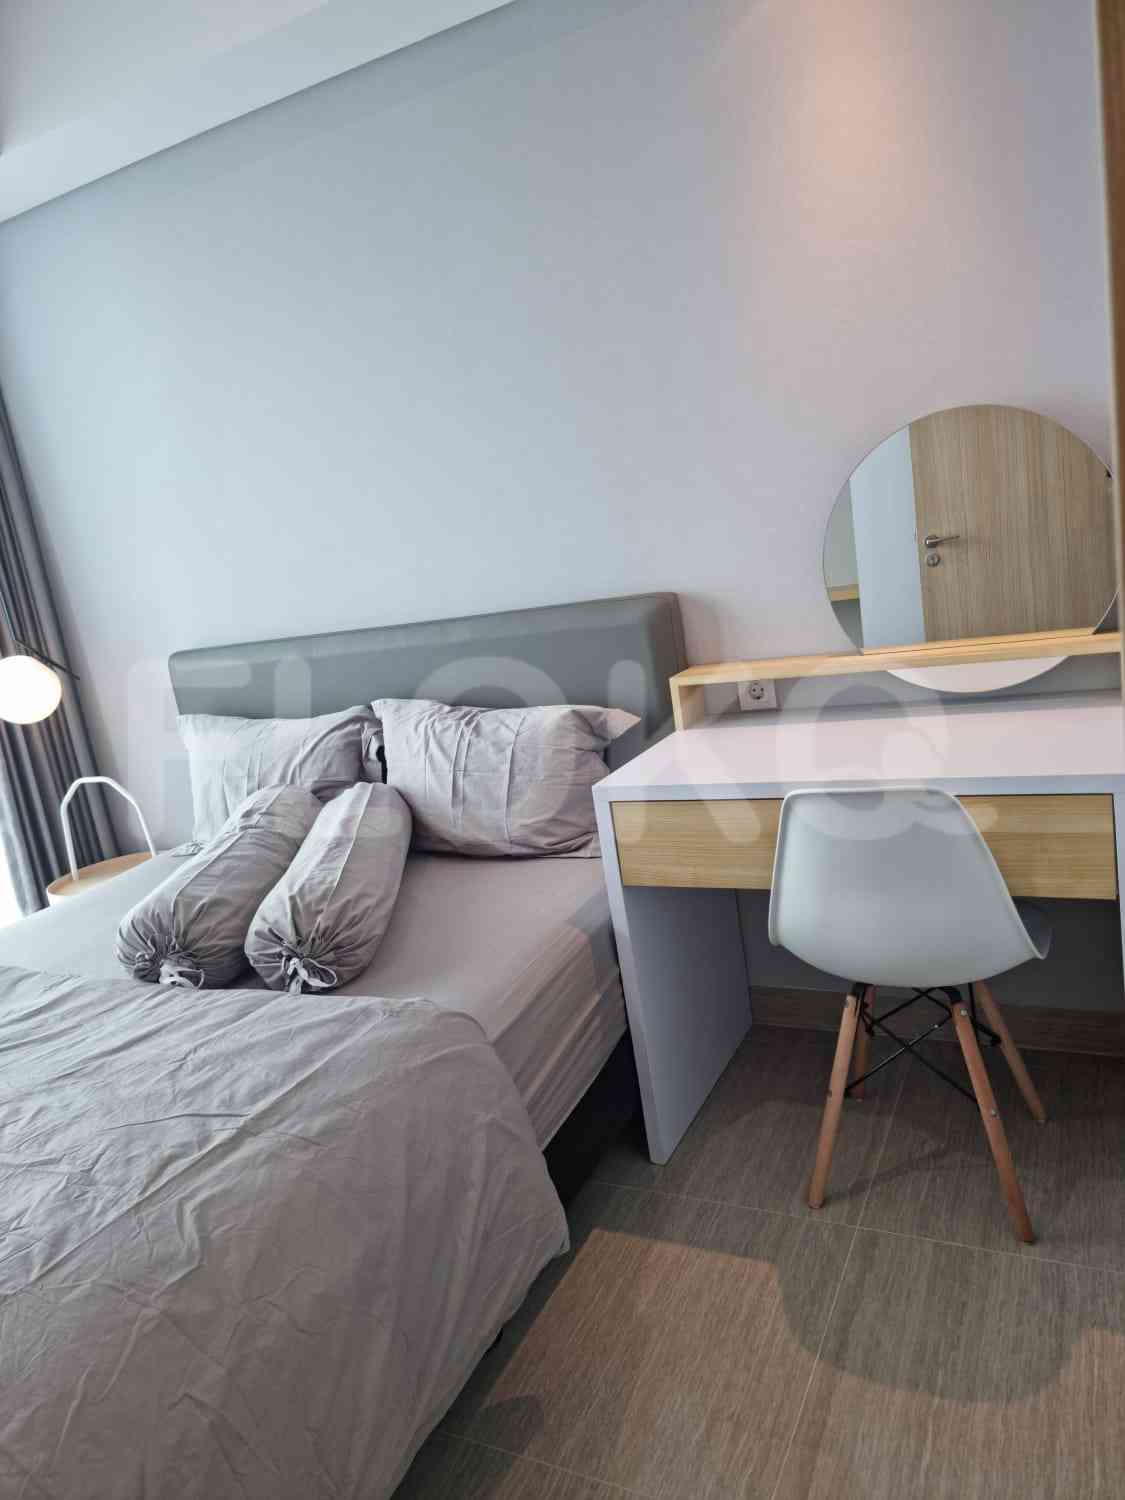 2 Bedroom on 22nd Floor for Rent in Millenium Village Apartment - fkad74 3